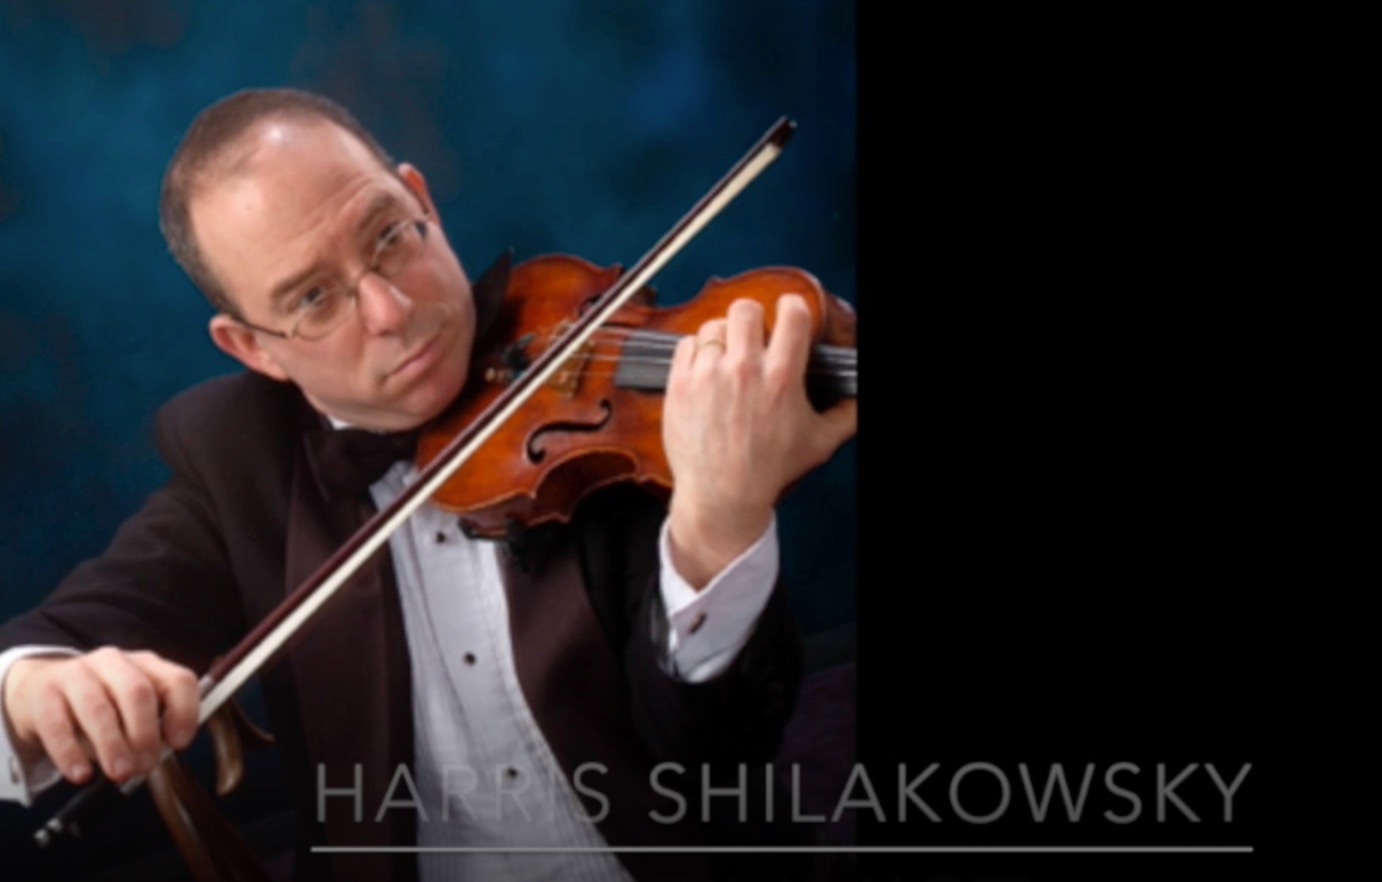 Harris Shilakowsky, violinist